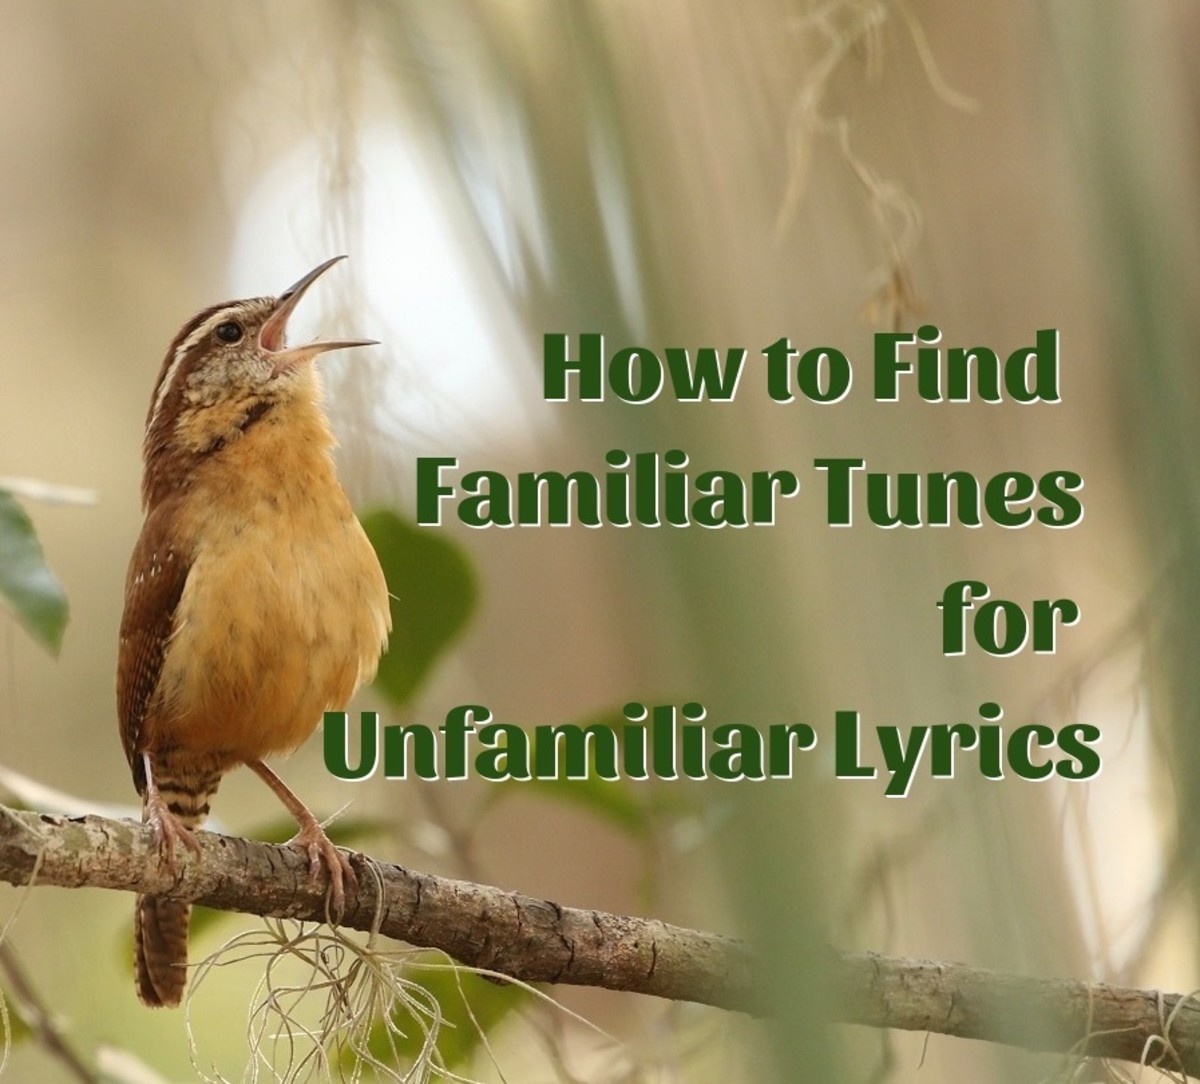 How to Find Familiar Tunes for Unfamiliar Lyrics